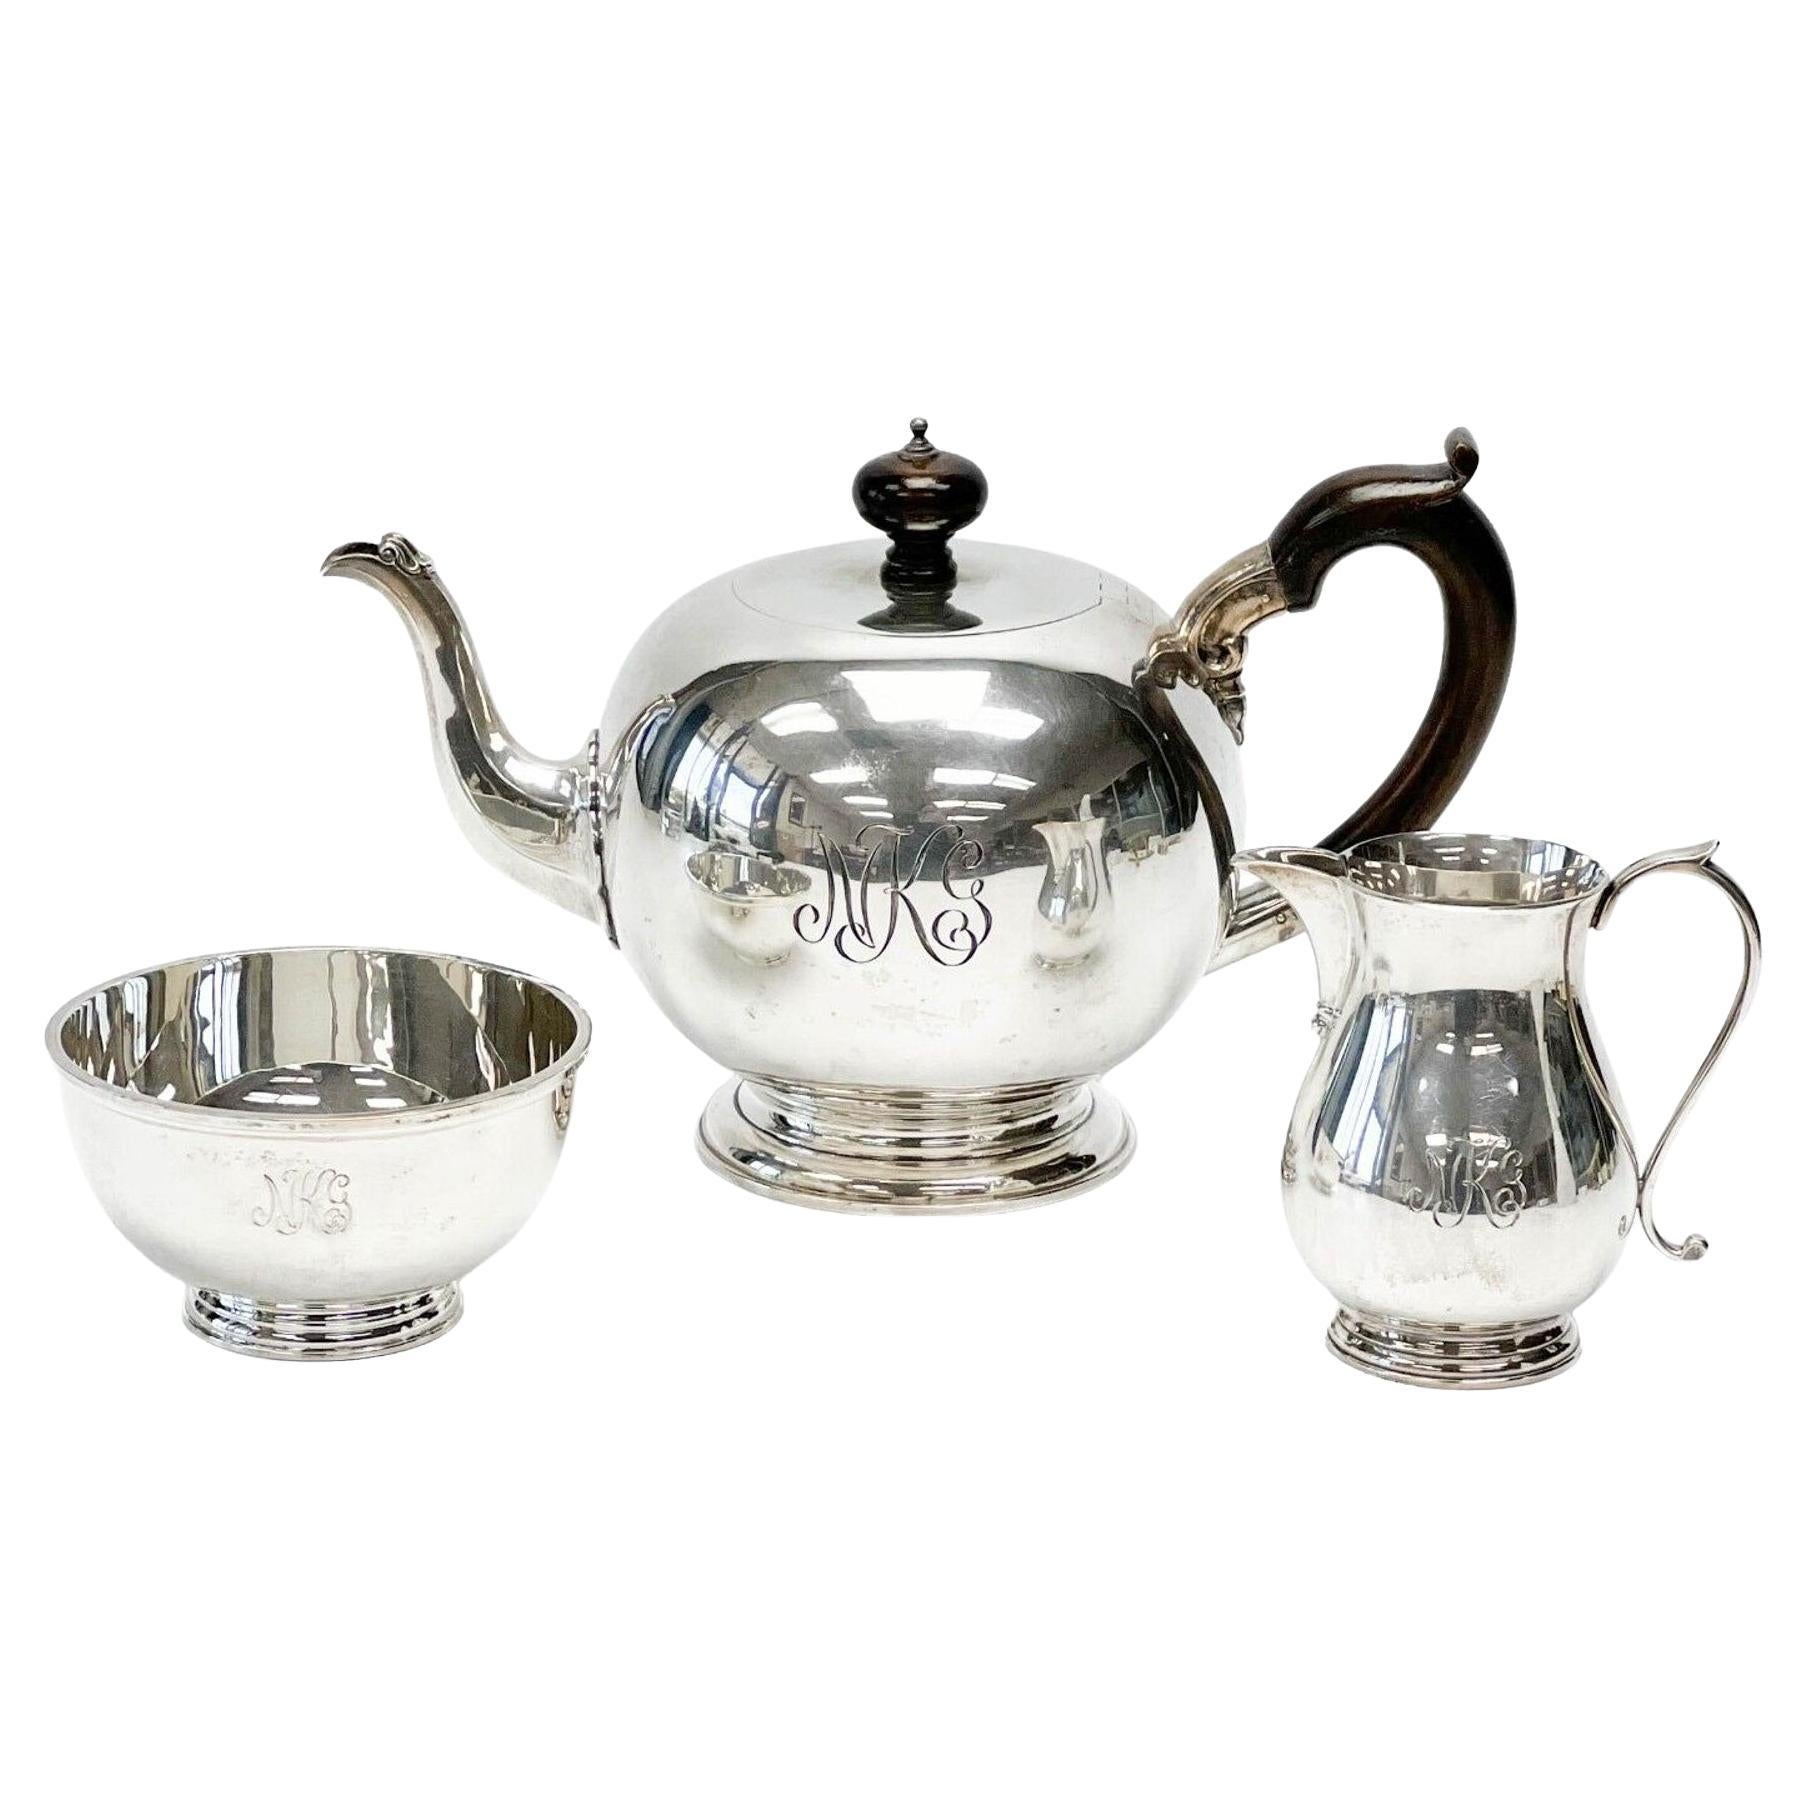 Asprey & Garrard England Sterling Silver Tea Set Teapot with Wood Handle For Sale